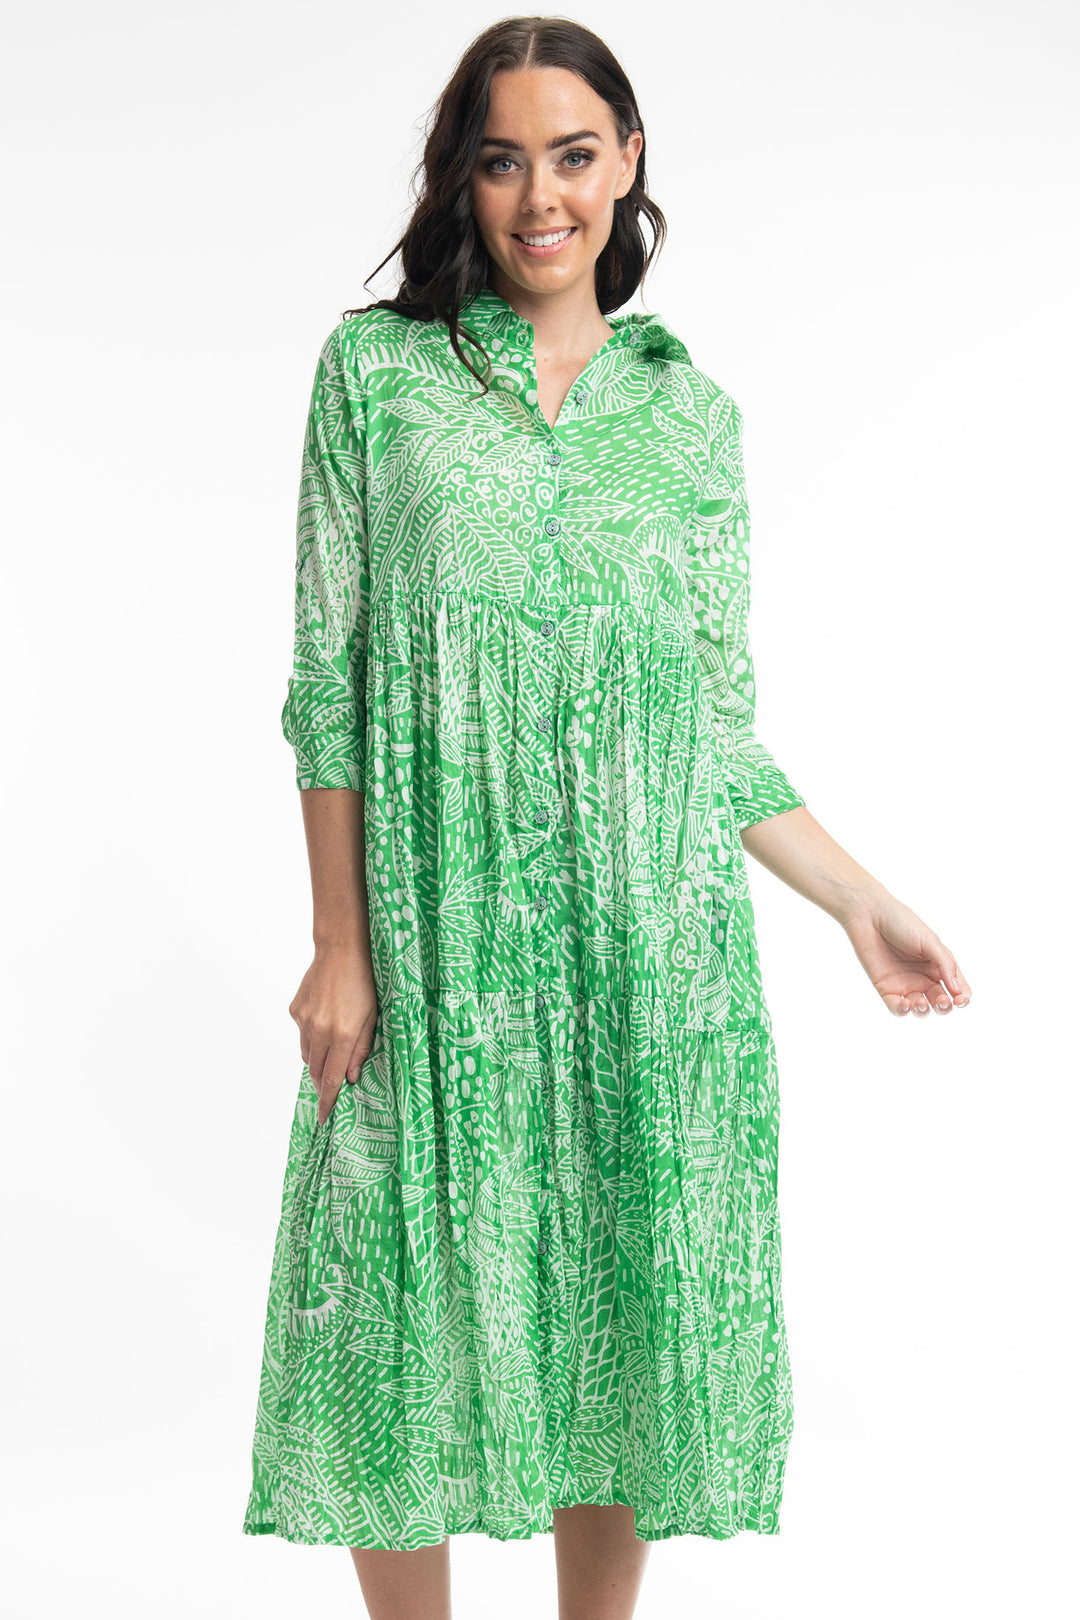 Orientique O41116 Green Leros Layered Collar Dress - Experience Boutique